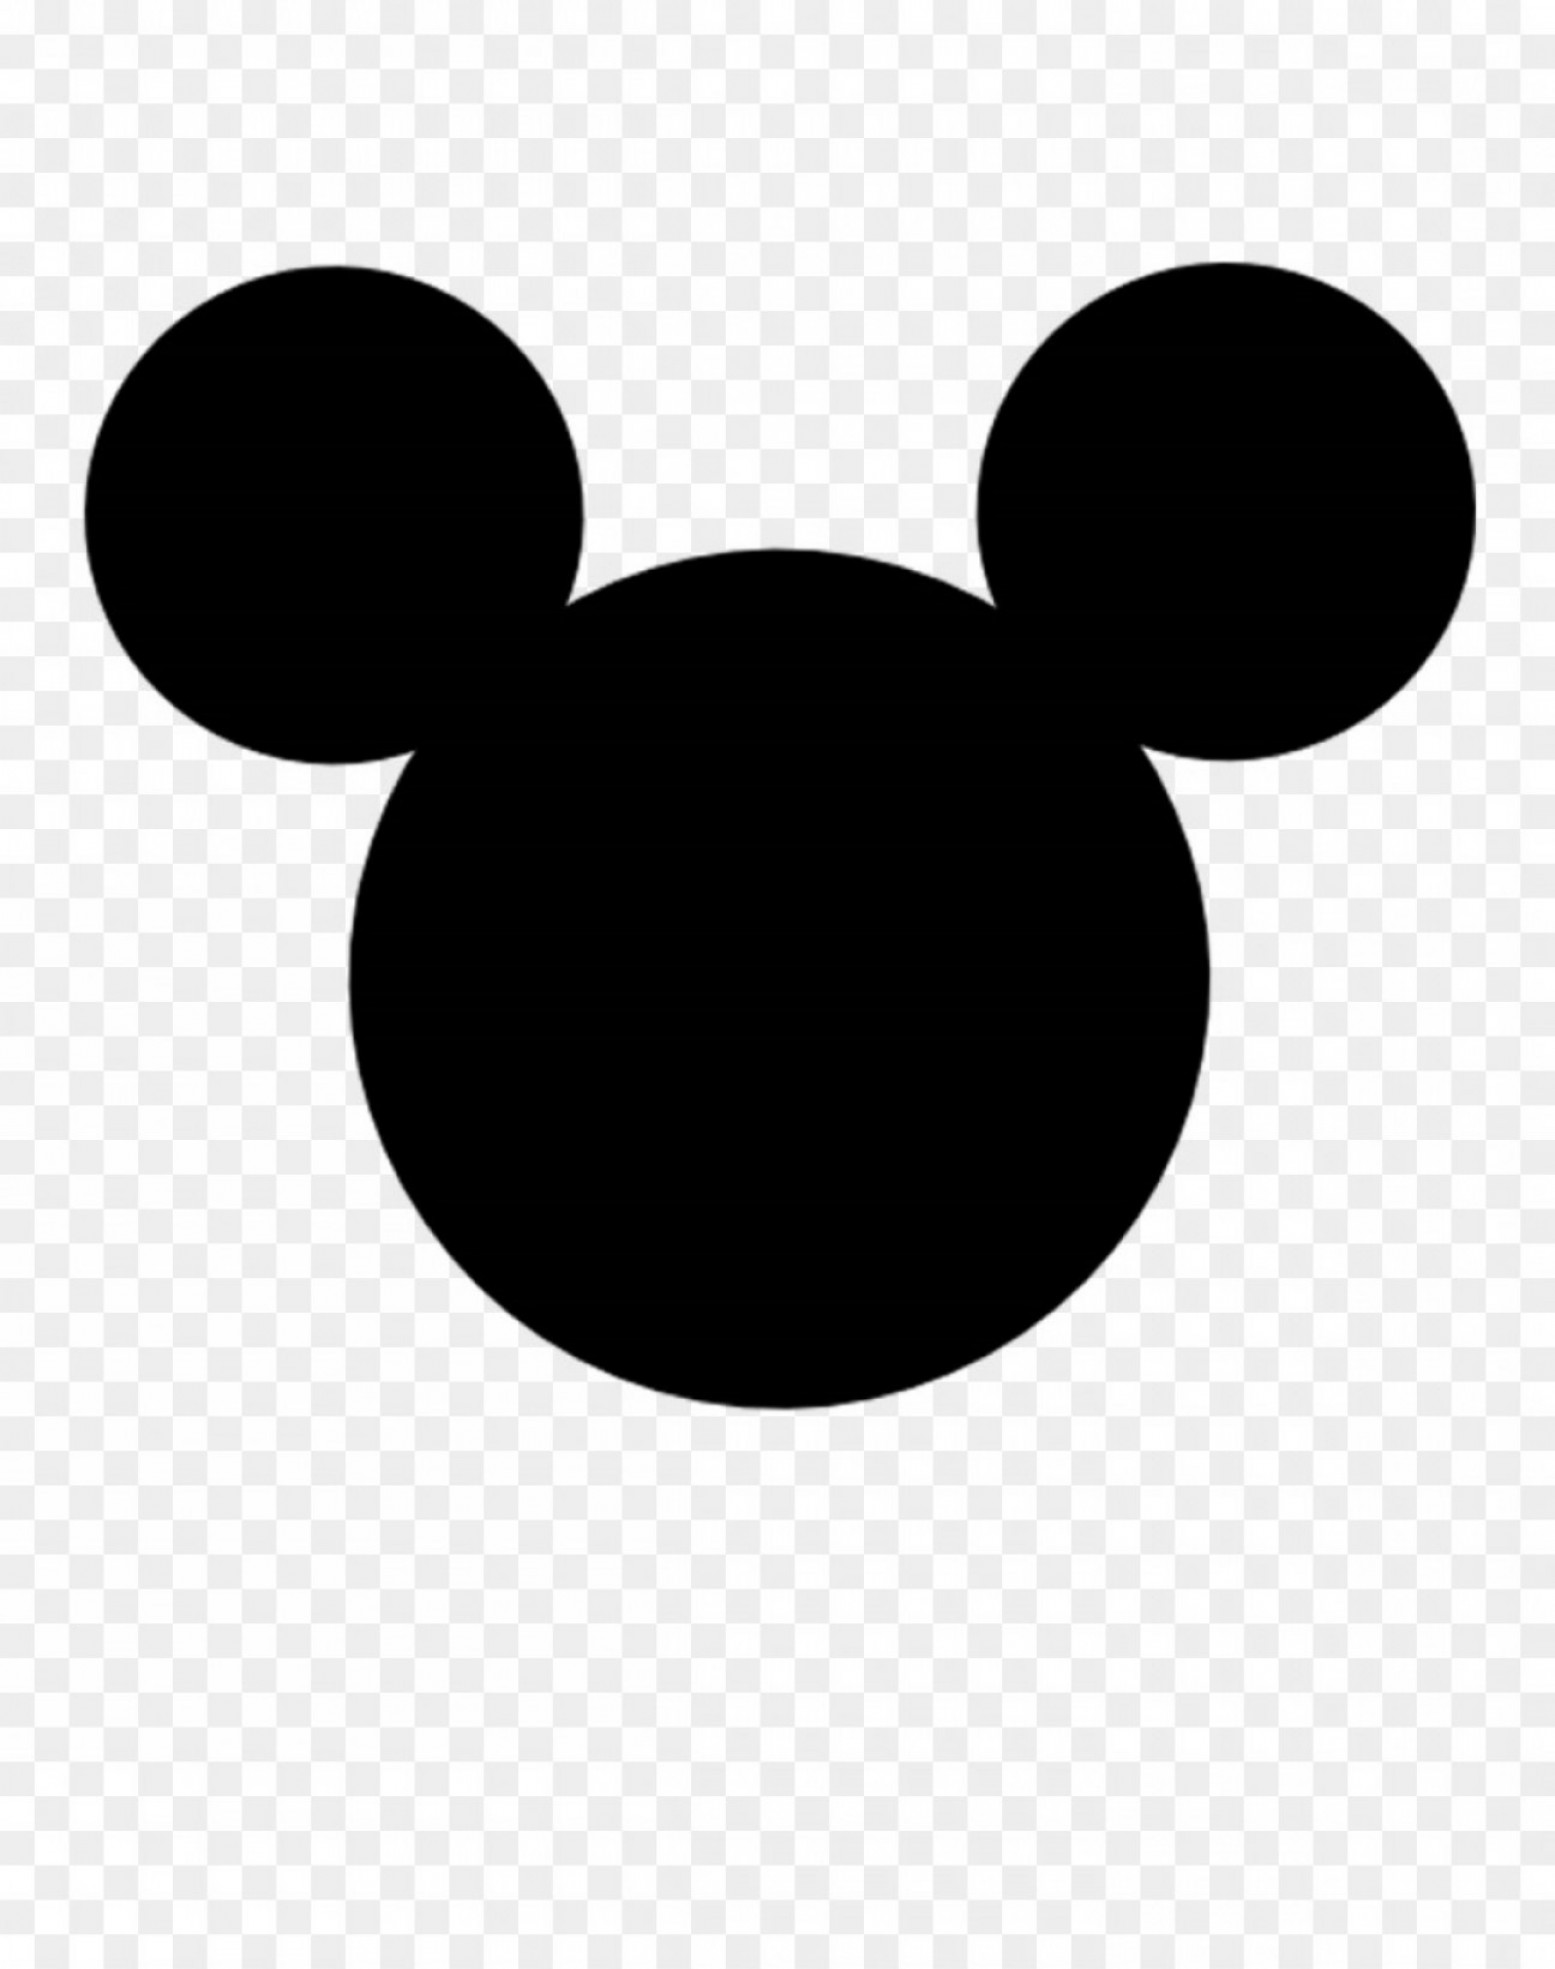 Free Mickey Mouse Logo Transp